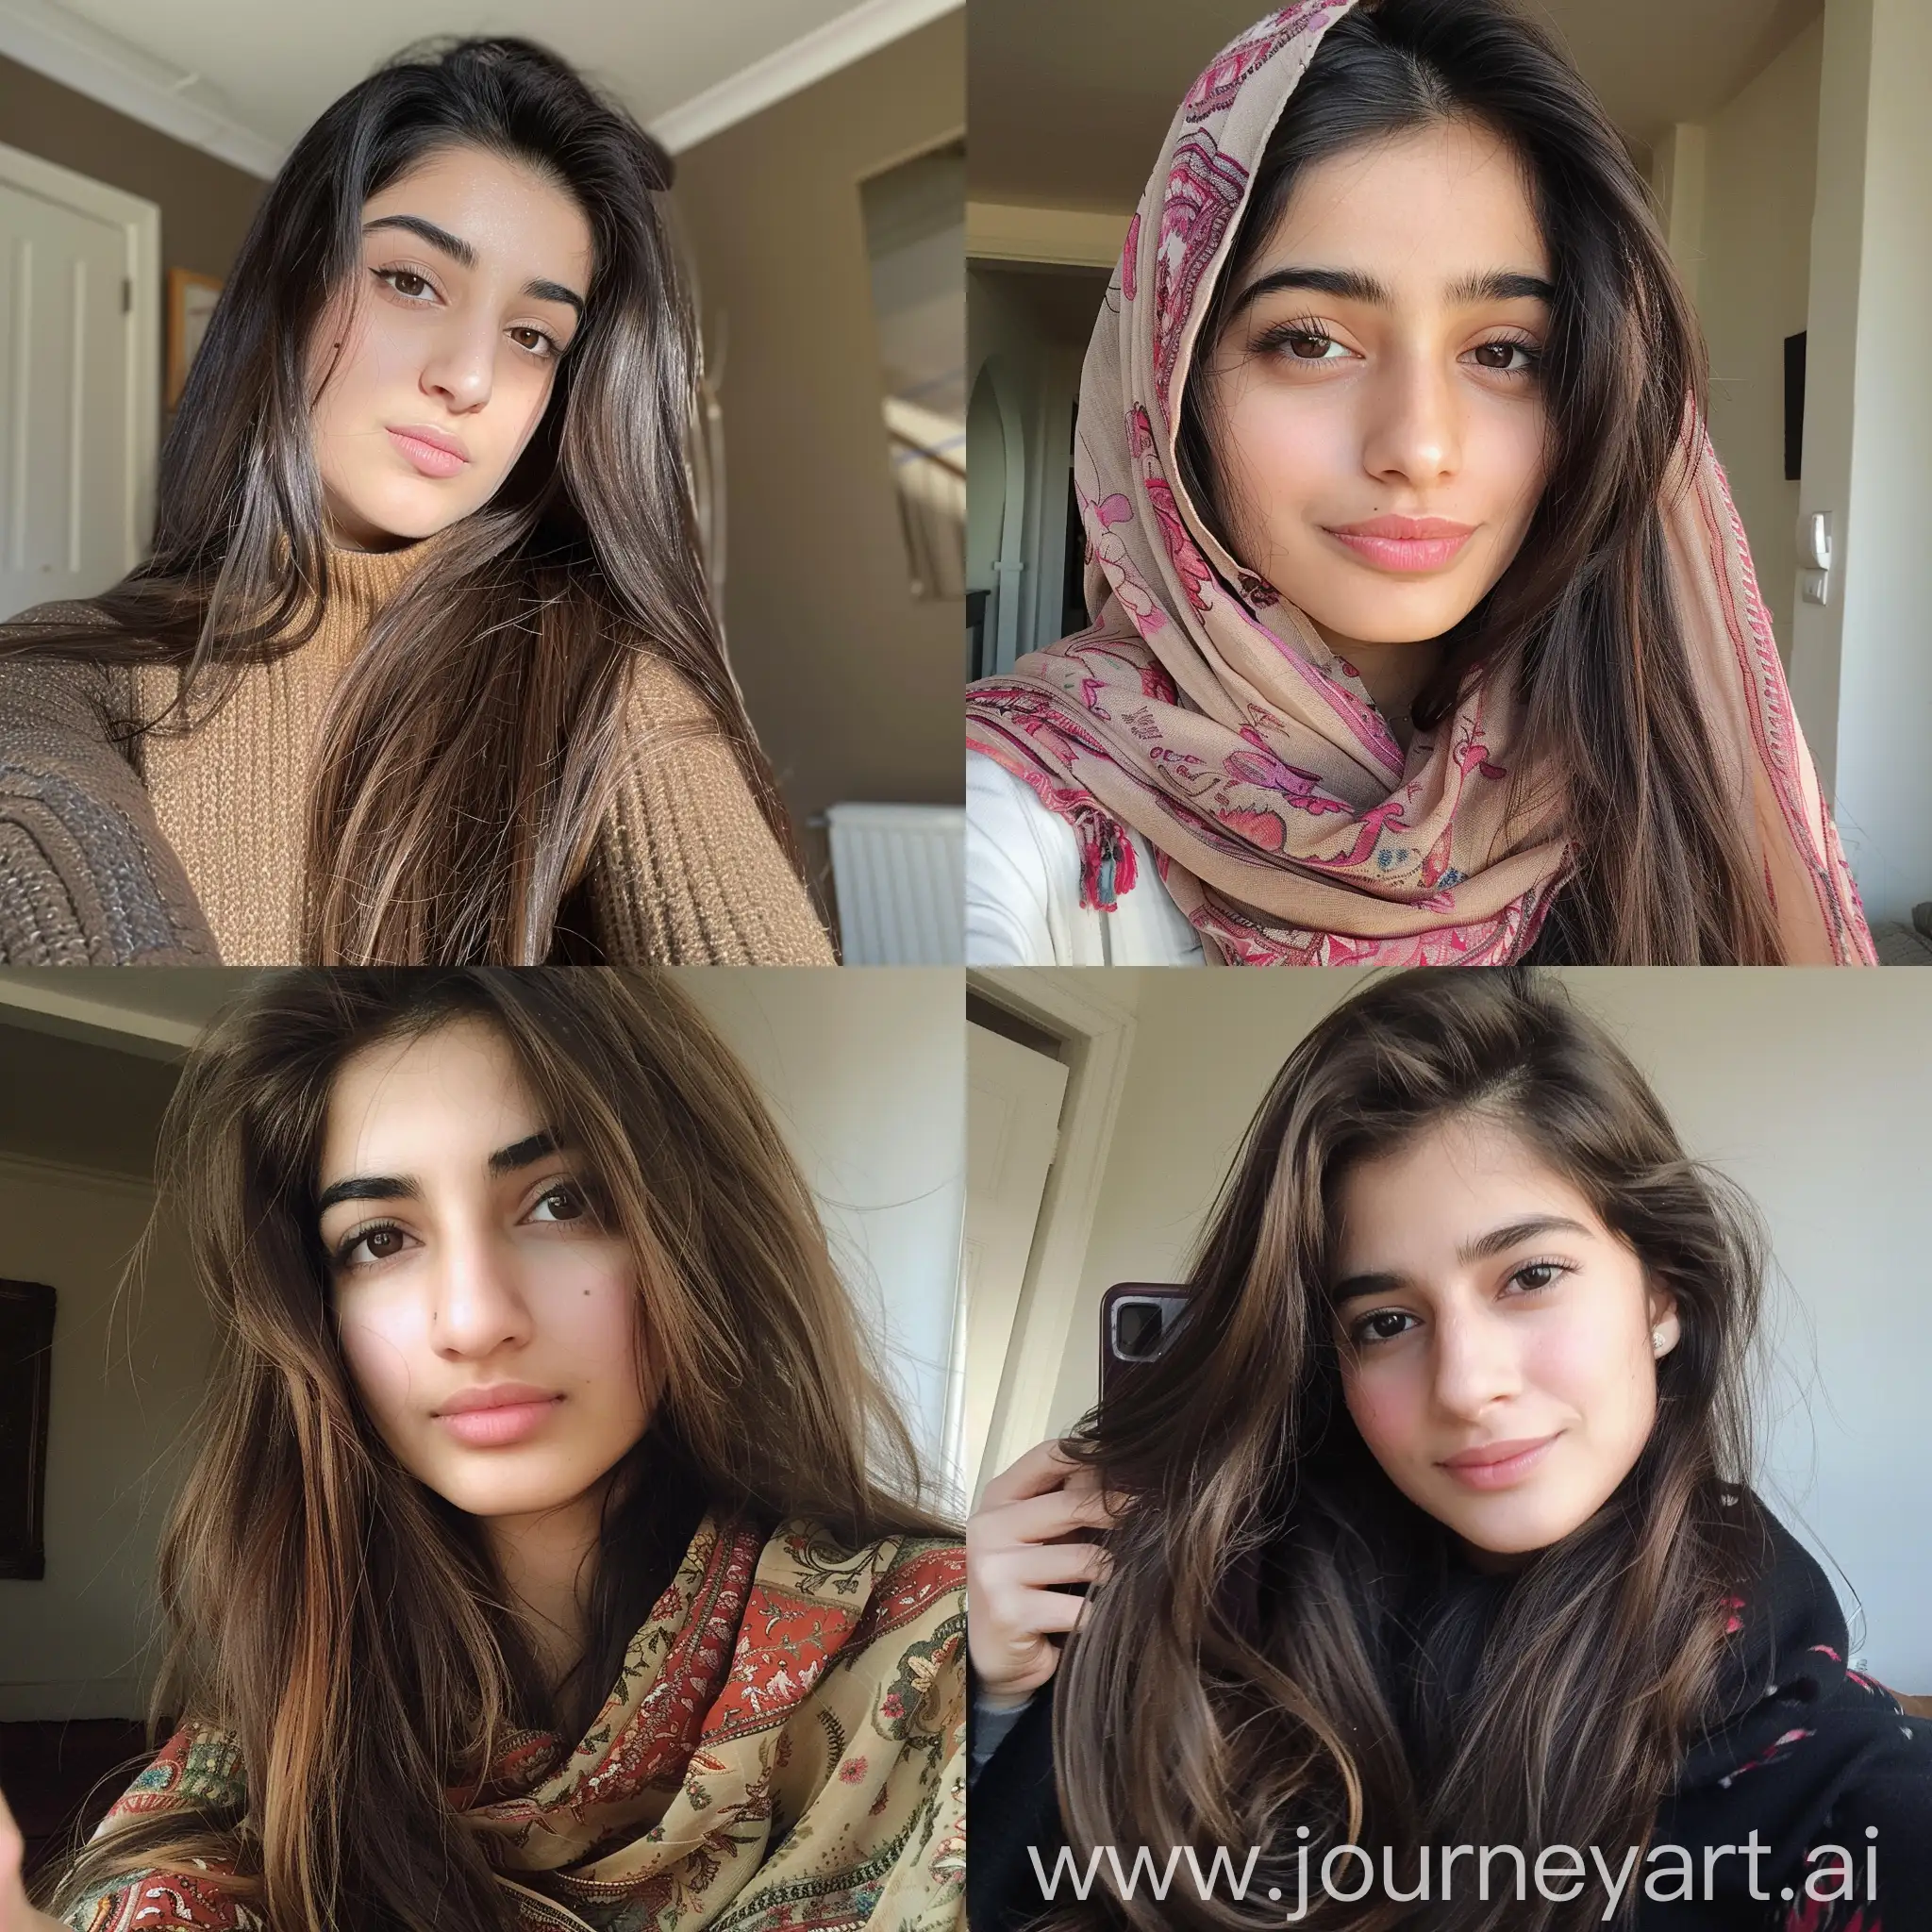 Stylish-British-Pakistani-Girl-Captures-Selfie-Moment-with-Elegance